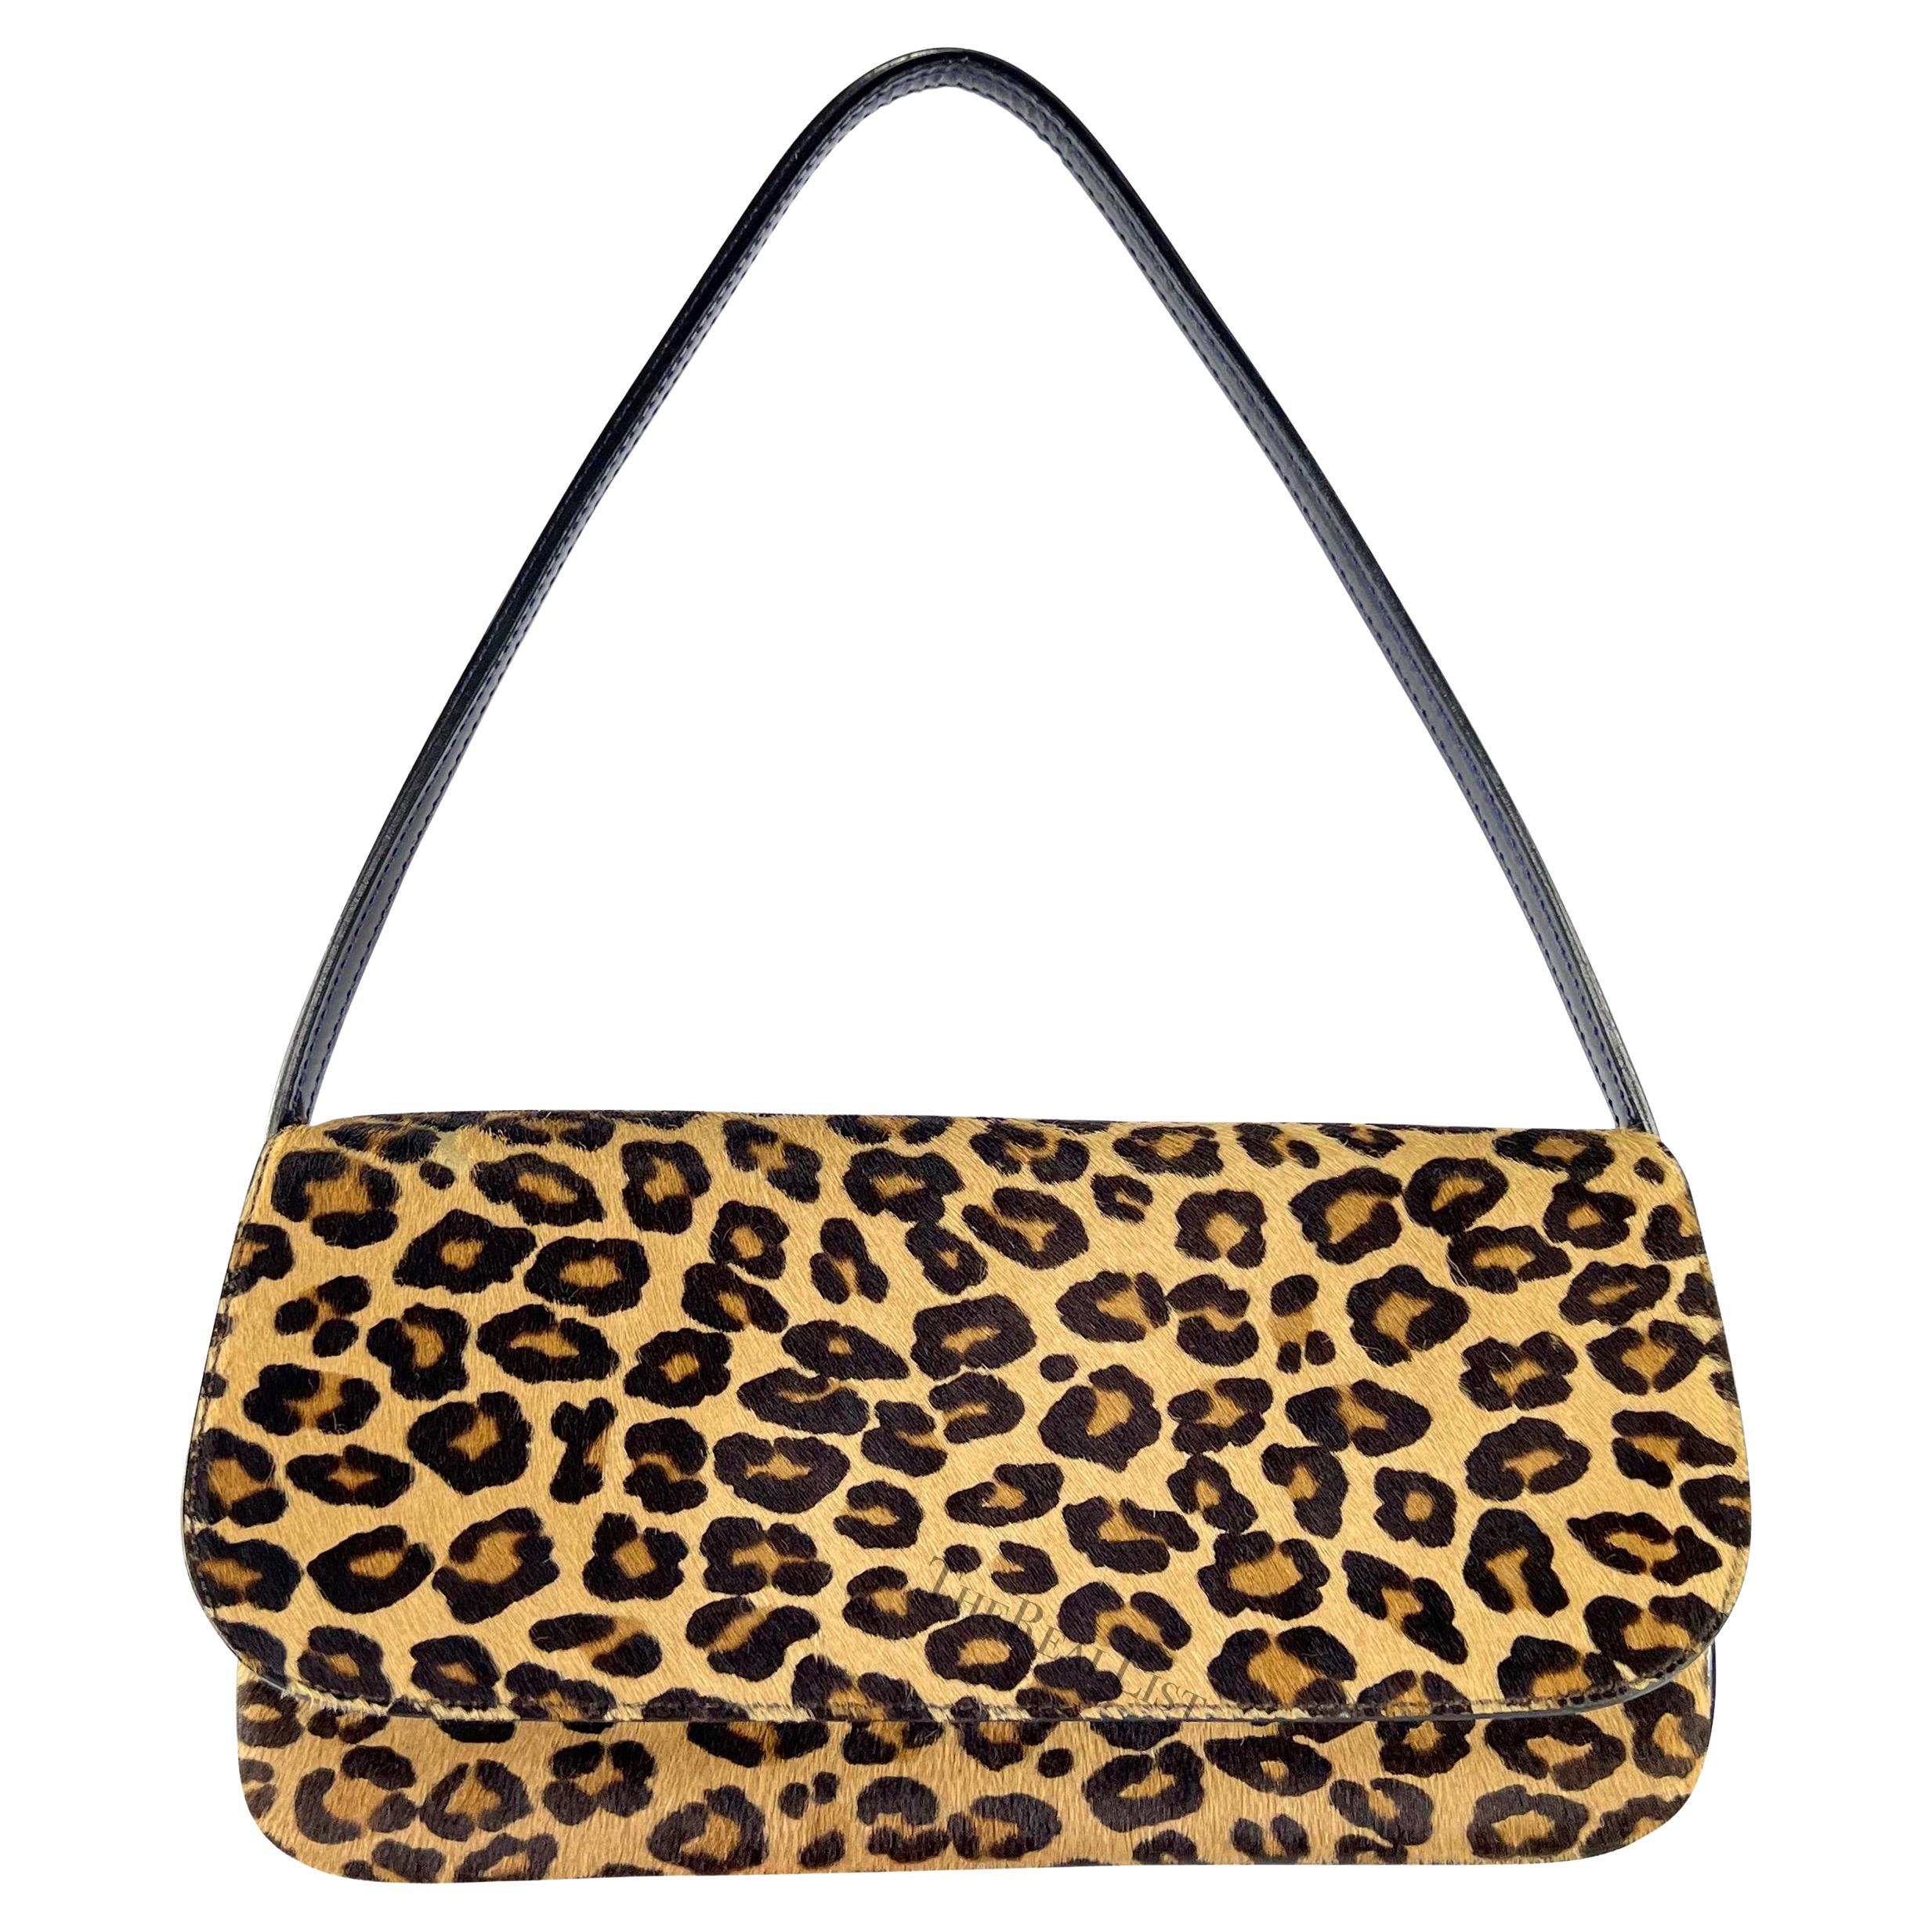 F/W 2000 Dolce & Gabbana Cheetah Print Pony Hair Small Shoulder Bag For Sale